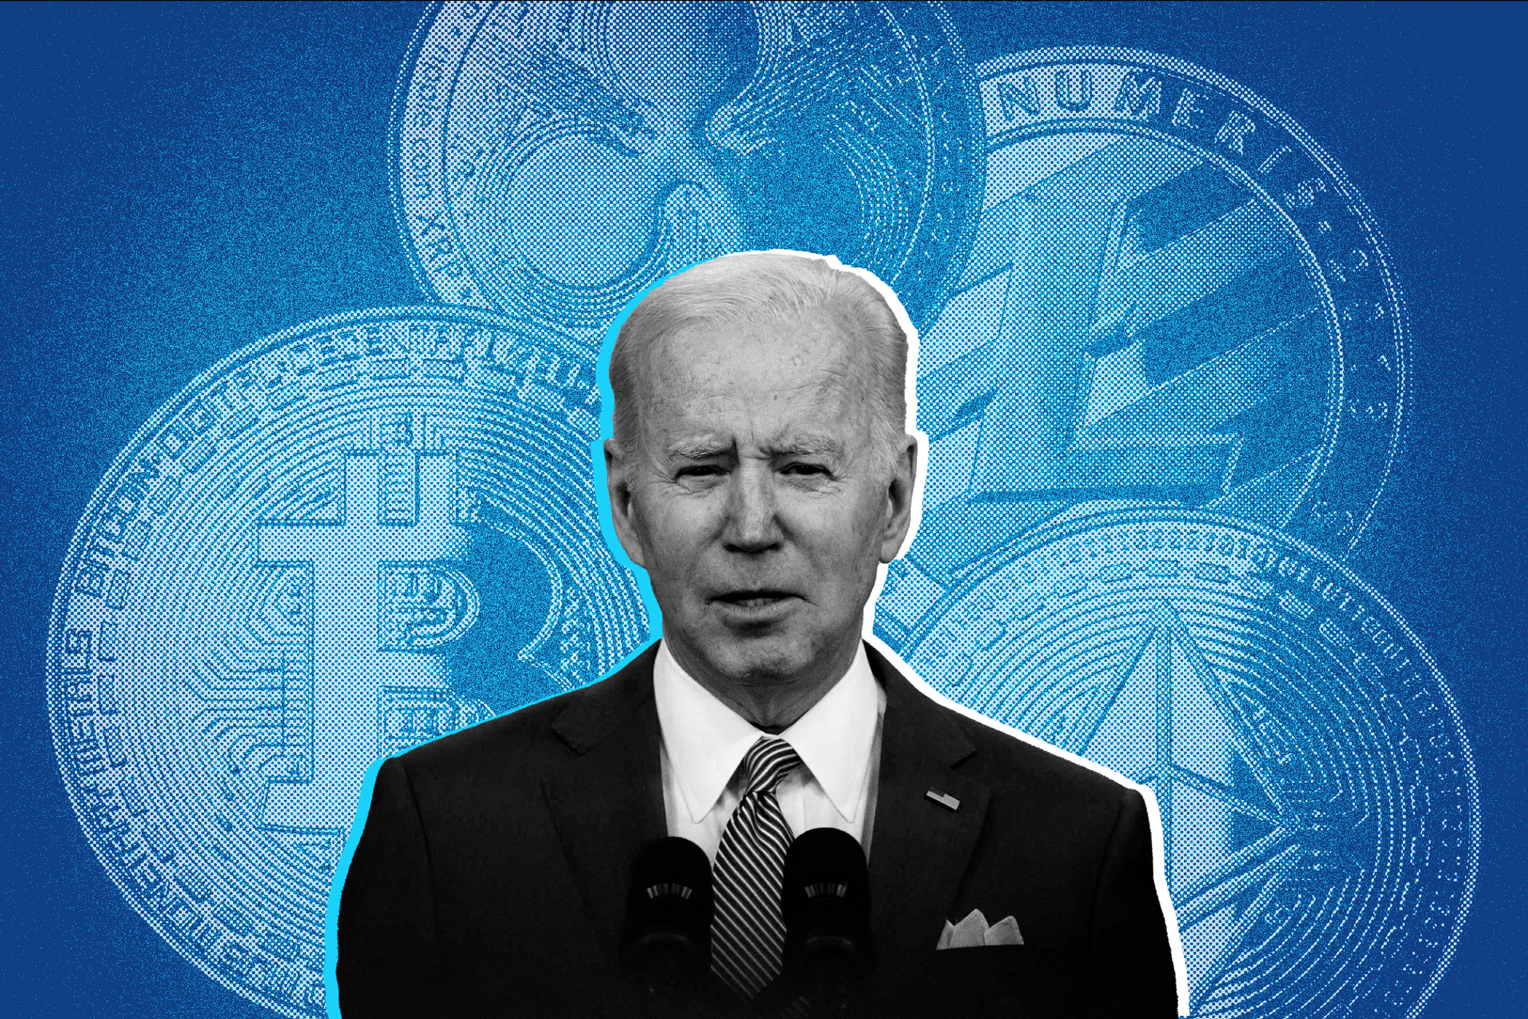 Joe Biden bucks: The horrors of digital currency.